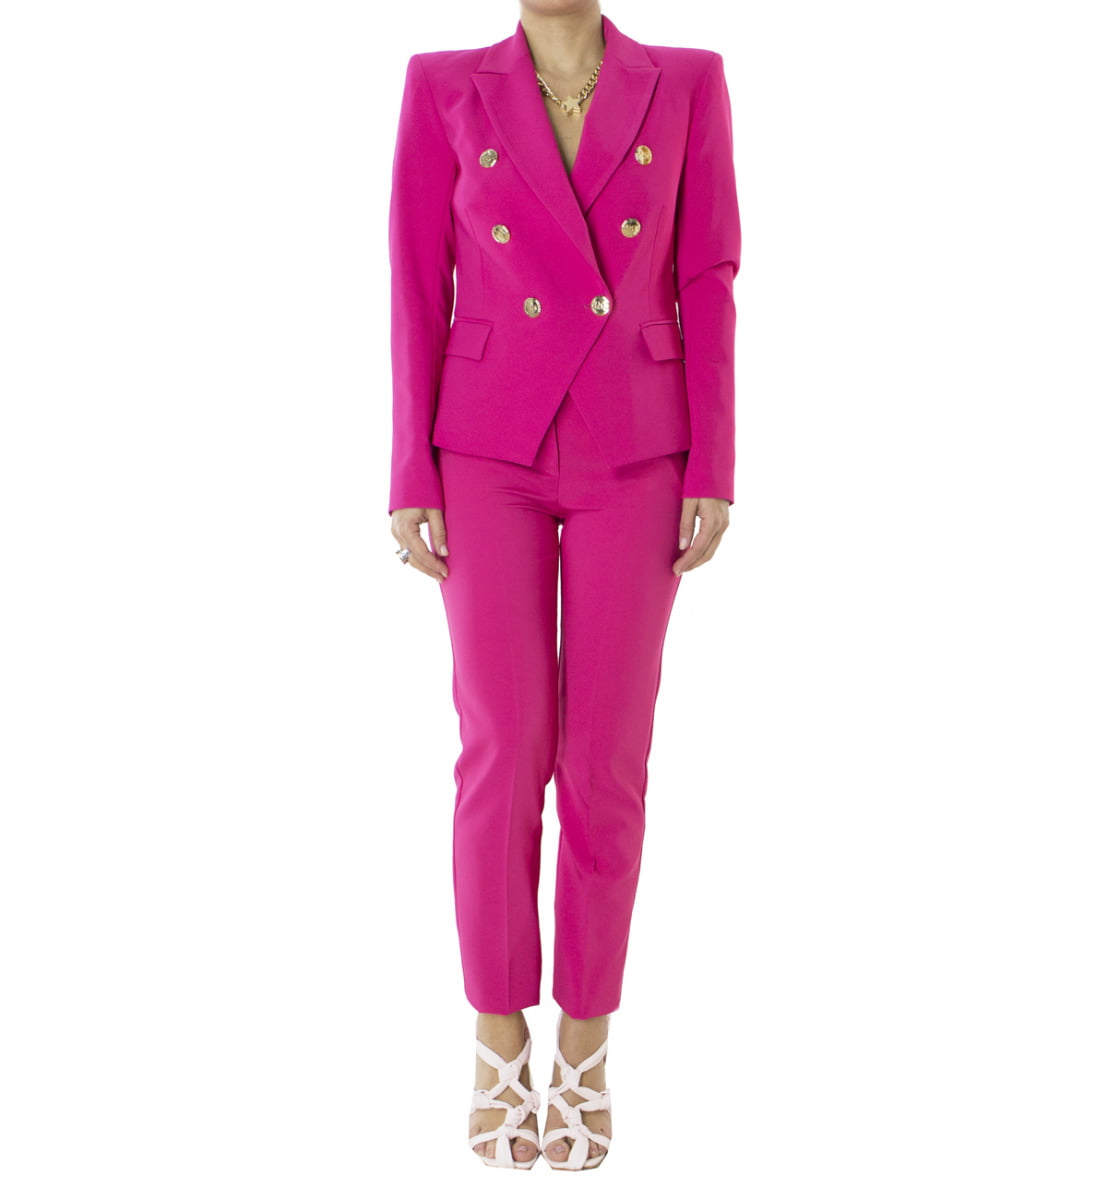 Pantaloni donna vita alta skinny rosa e bianco tasca a filo passacinta e chiusura zip avanti con bottone